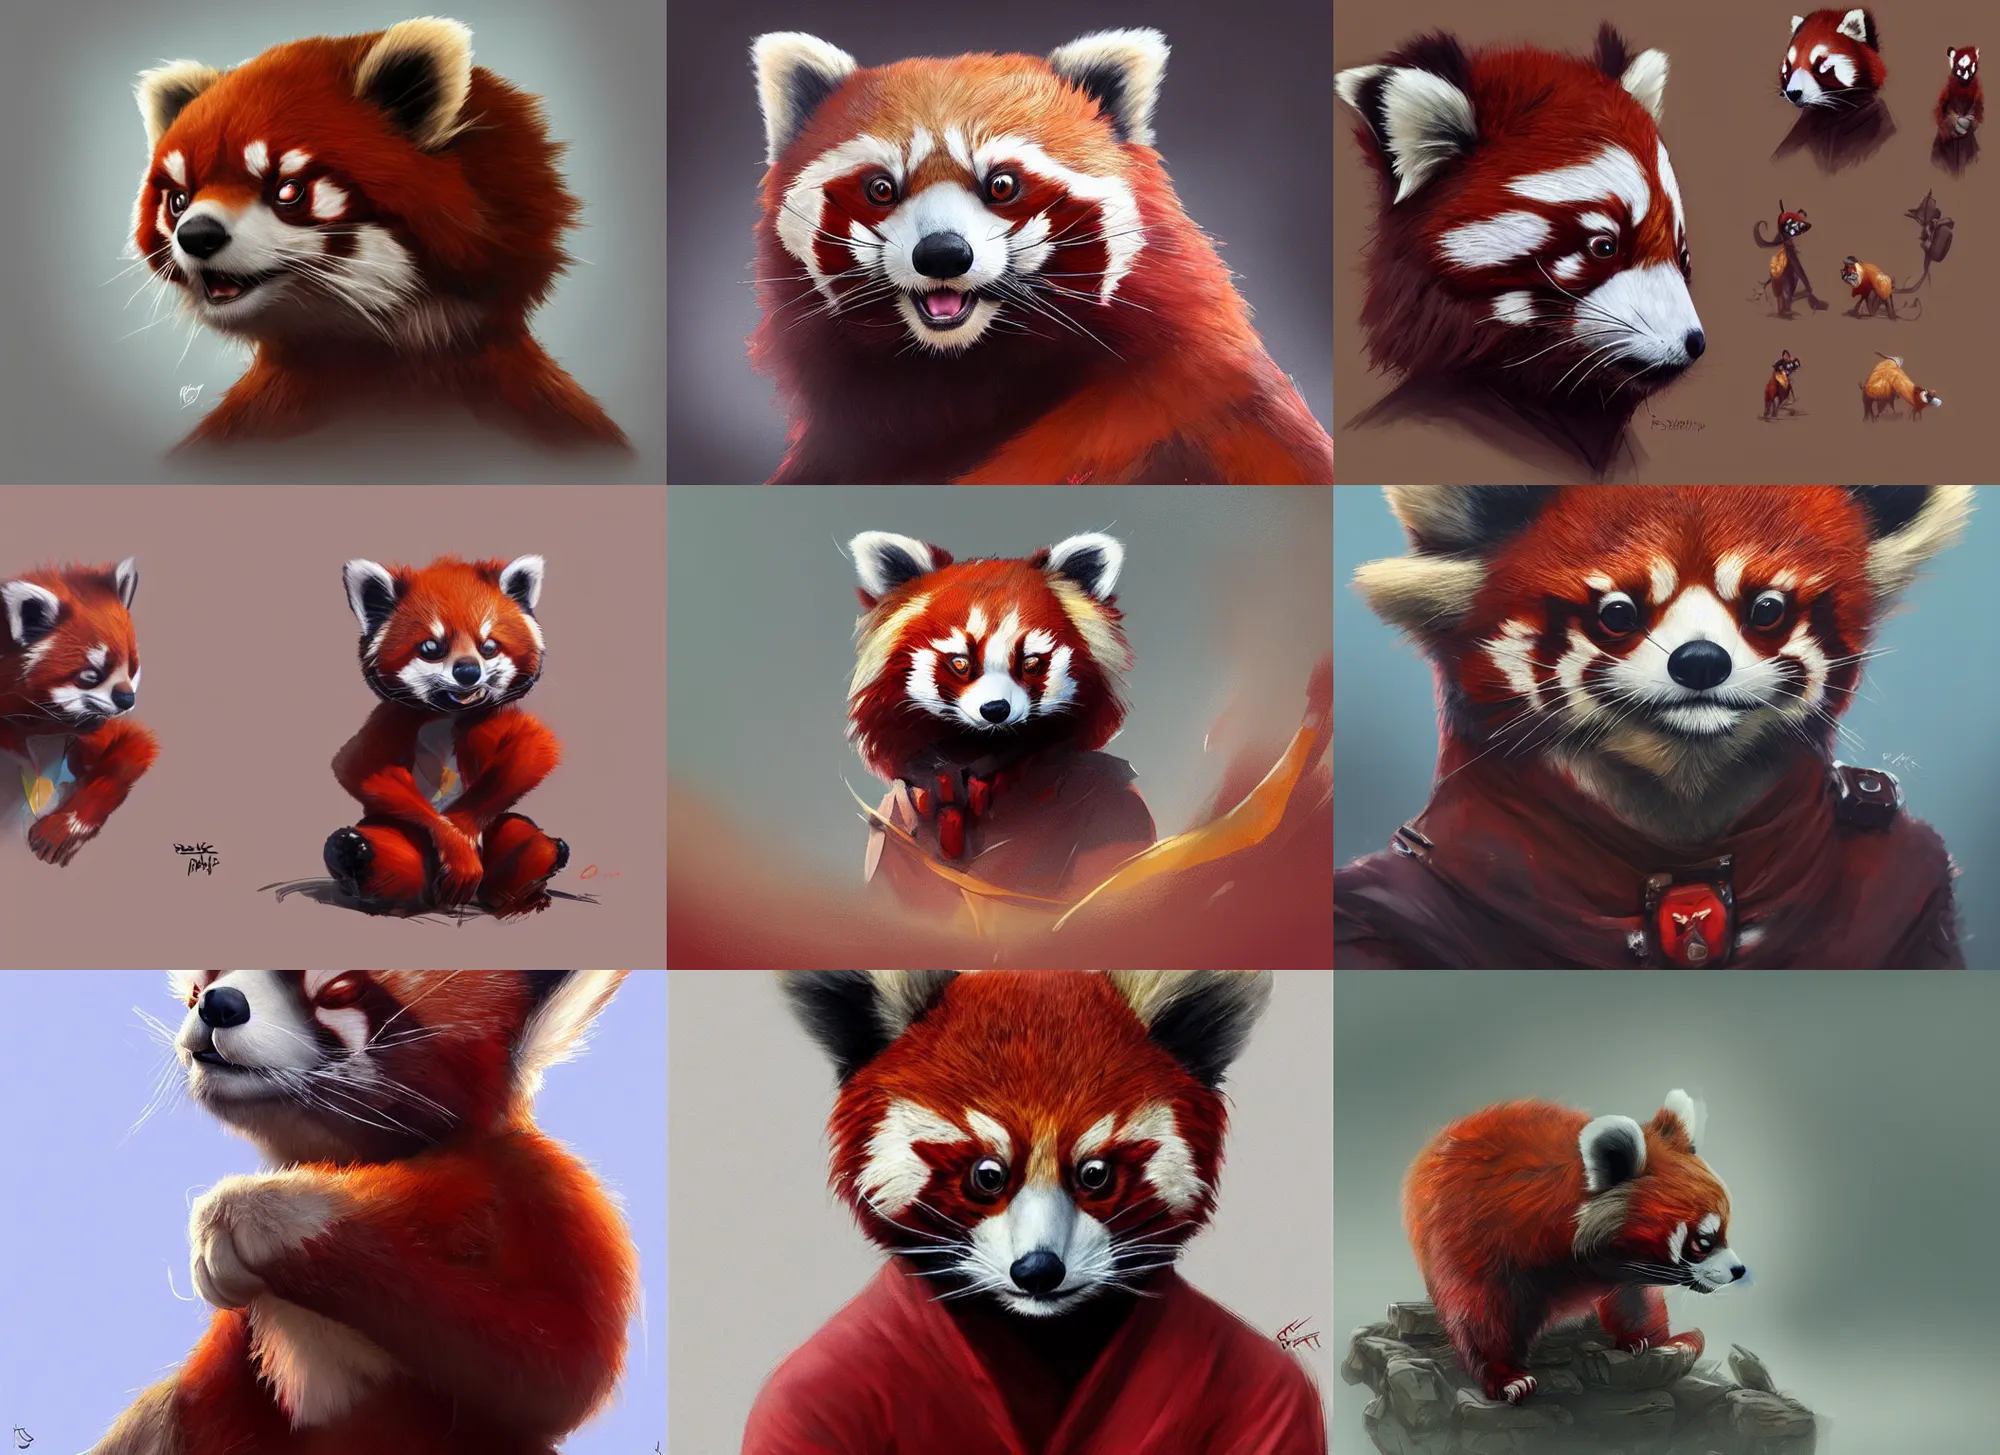 Prompt: detailed concept art of a anthropomorphic red panda character by patryk stefaniak, darek zabrocki artstation,